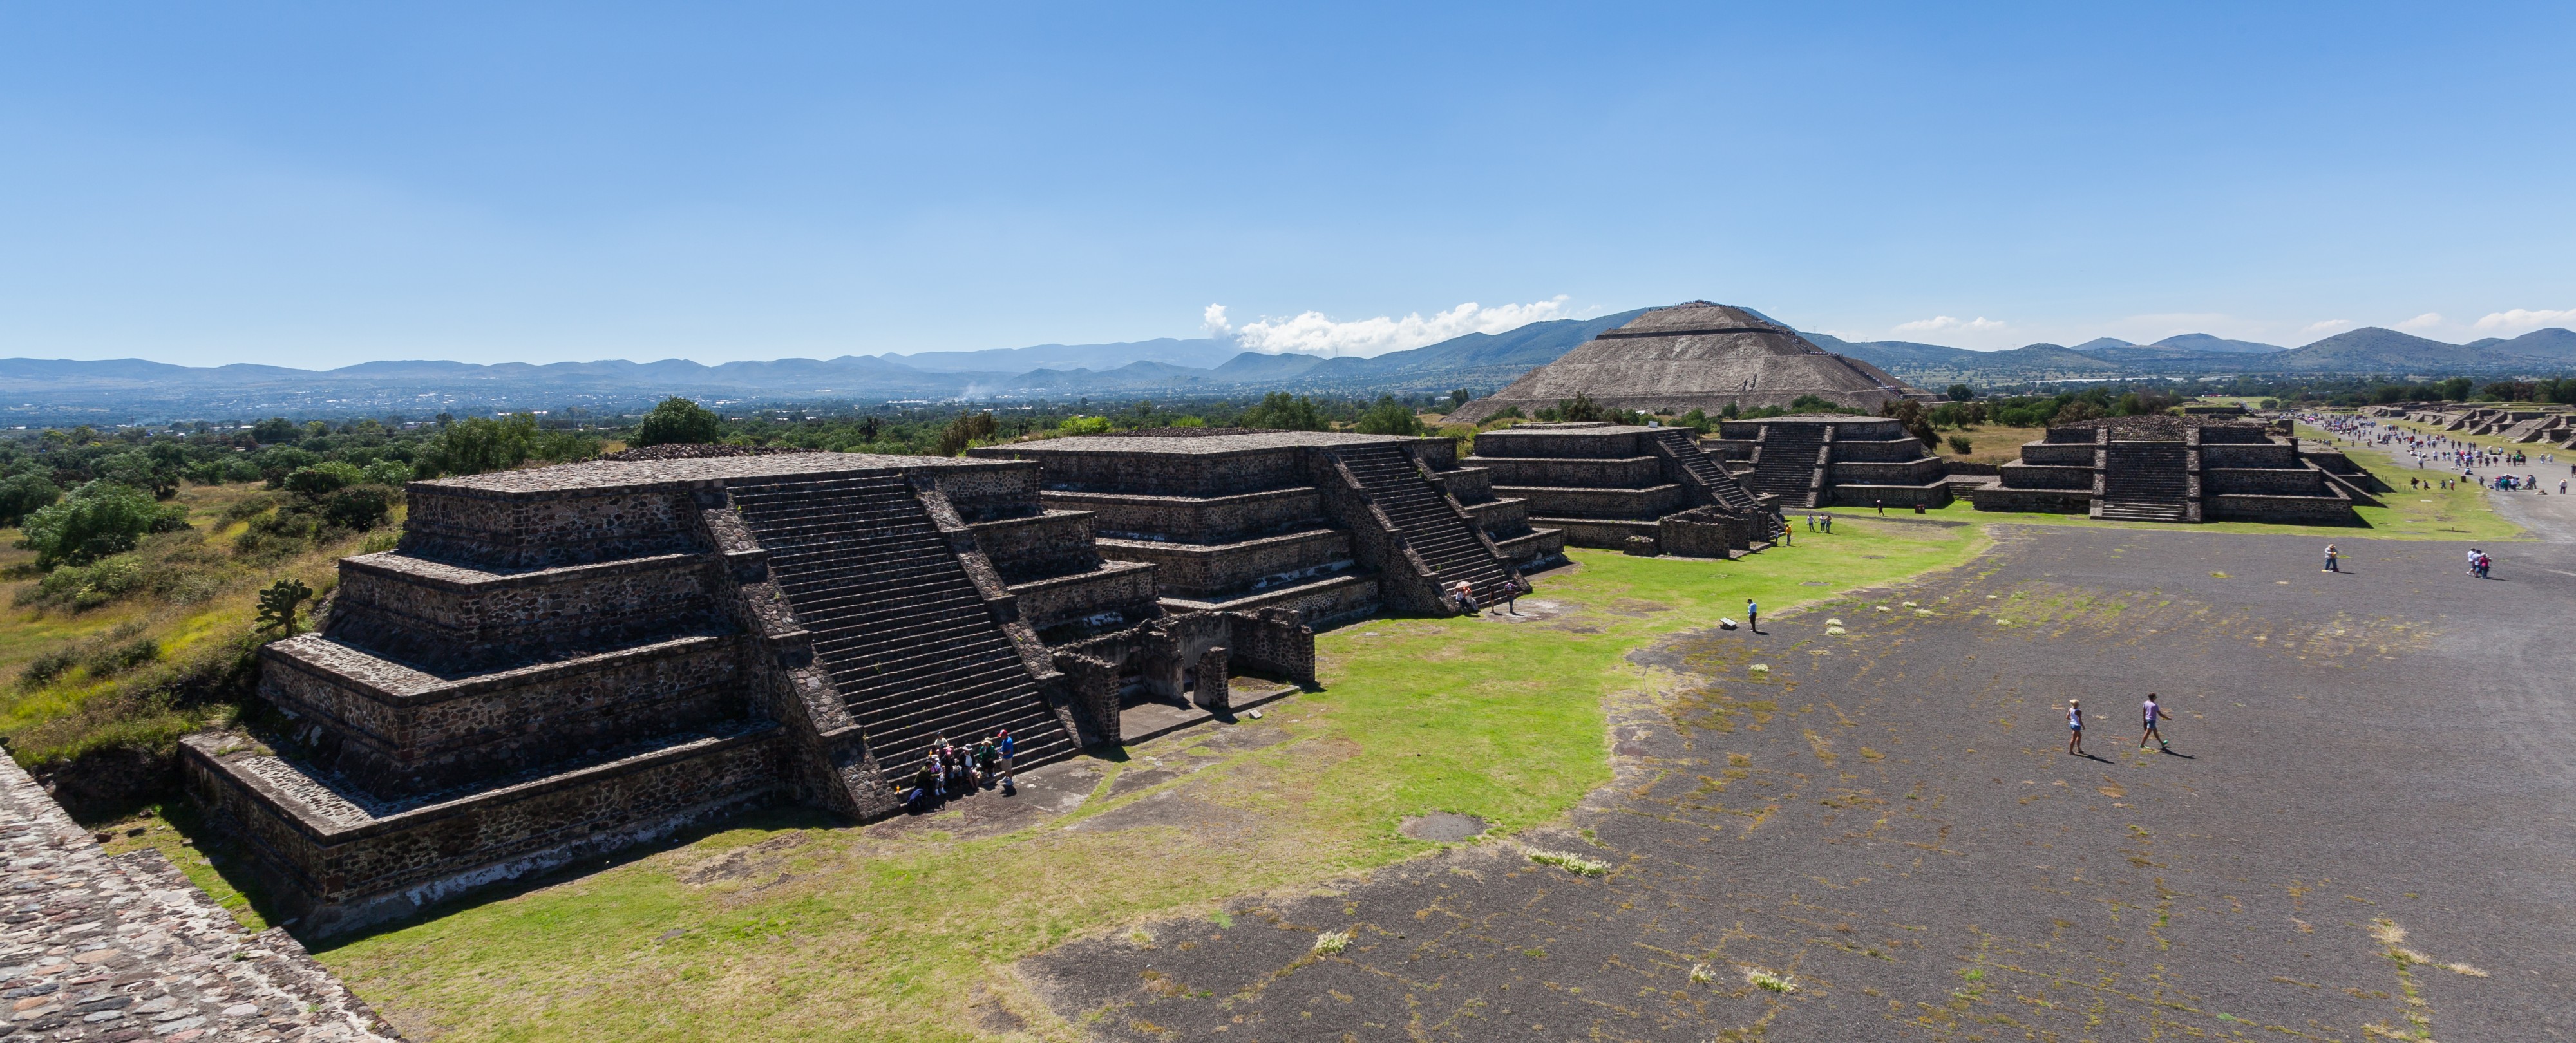 Teotihuacán, México, 2013-10-13, DD 66